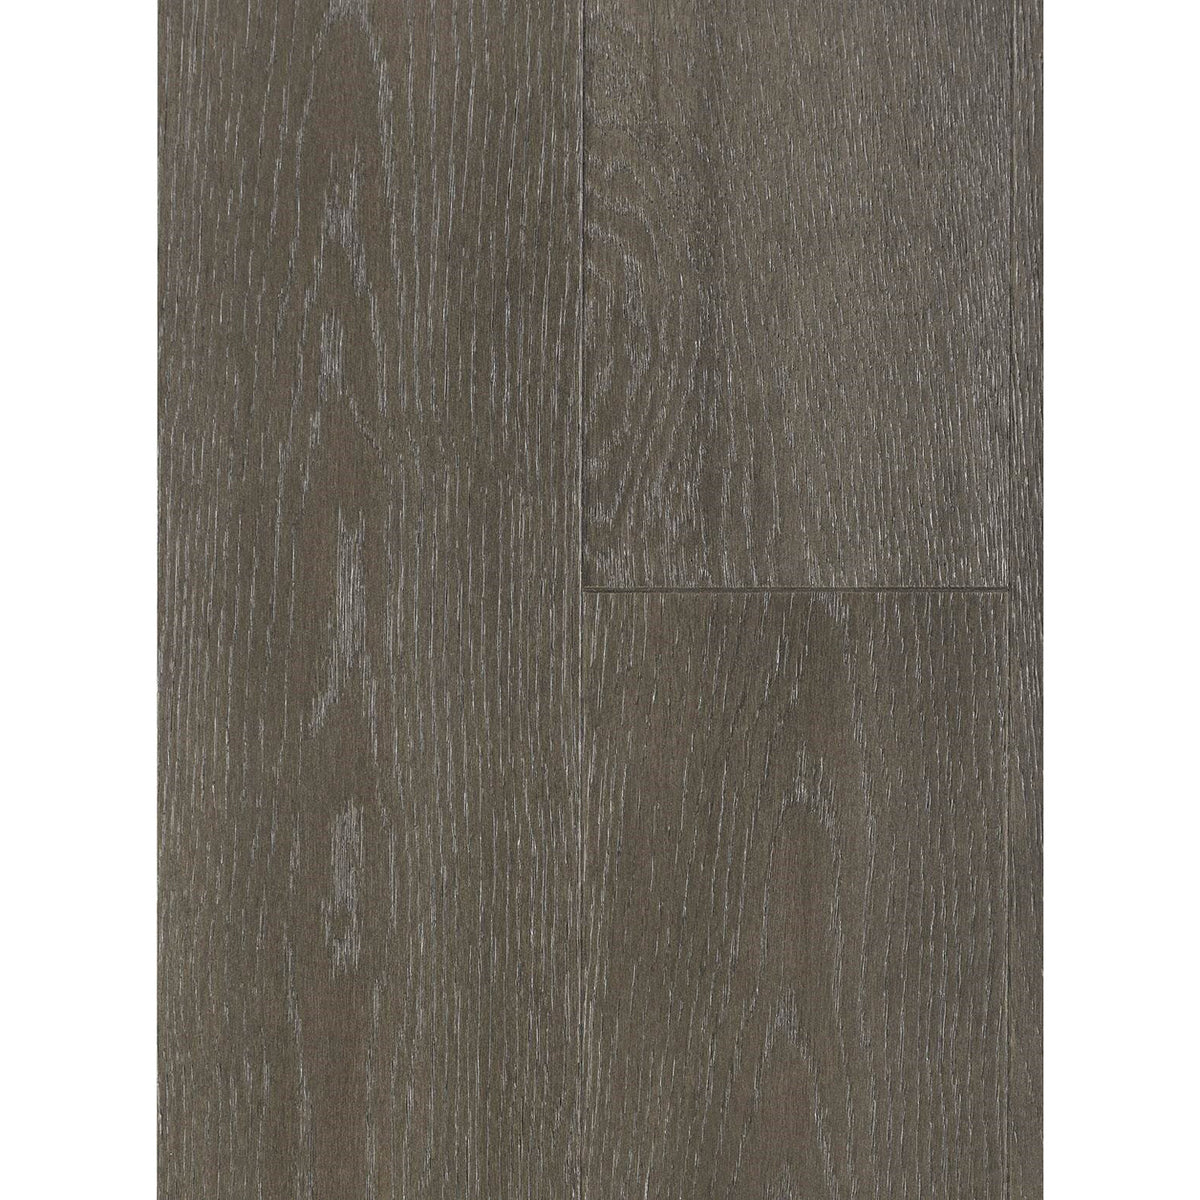 LM Flooring - Bentley Premier - Weathered Stone White Oak